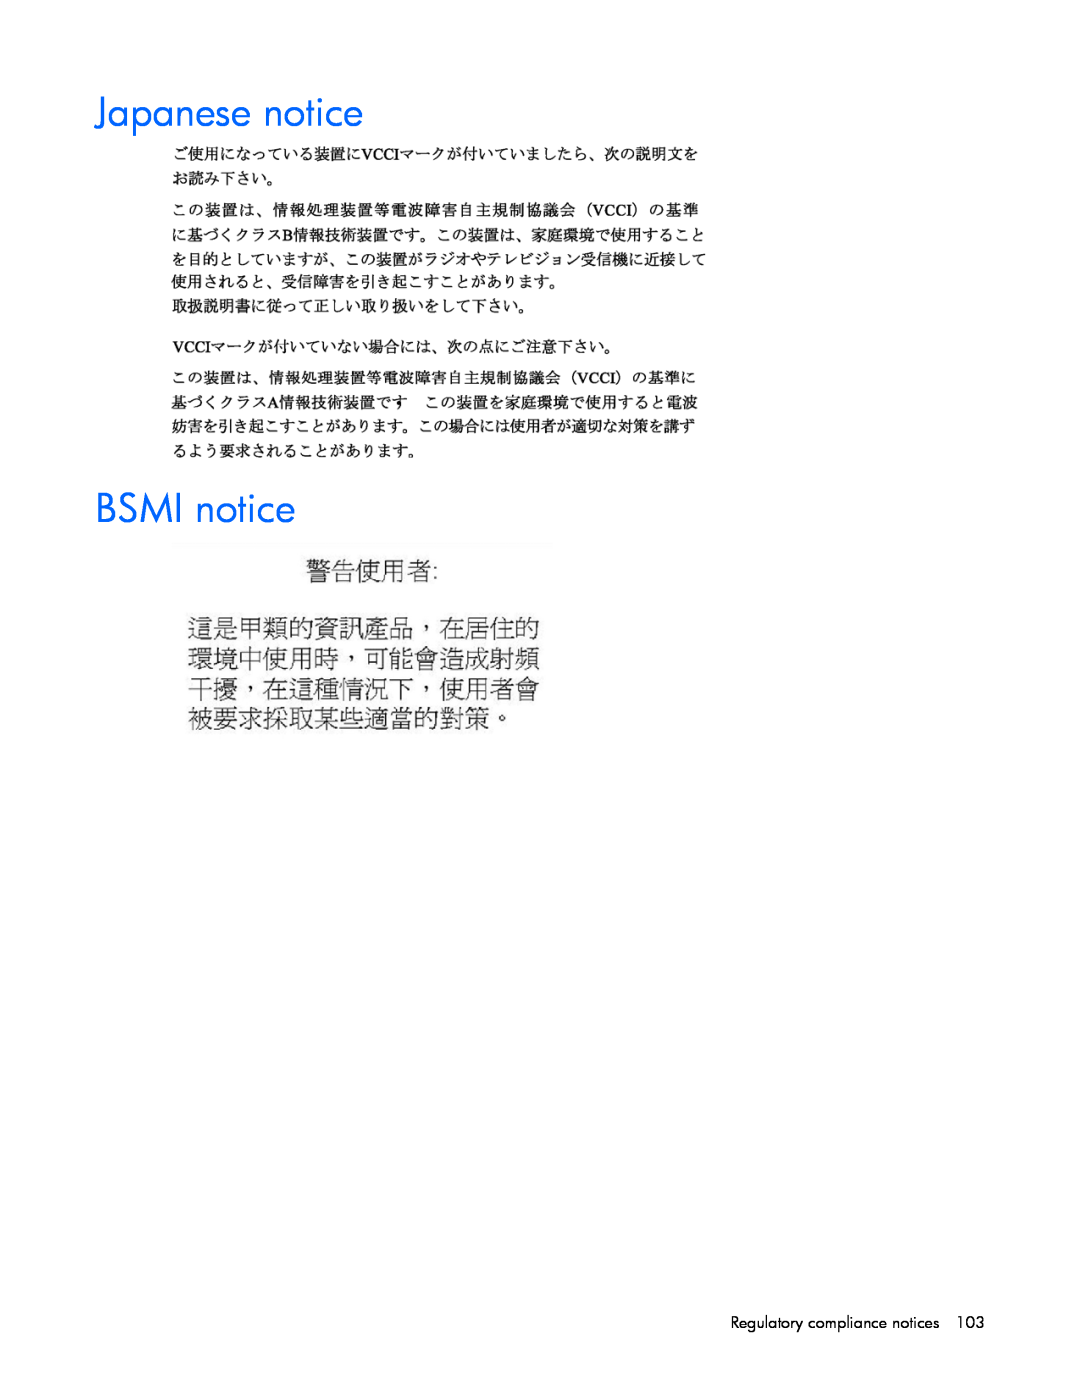 HP J4370A, A6584A, A1354A, A1353A, A1356A, J4373A, J4367A manual Japanese notice BSMI notice, Regulatory compliance notices 